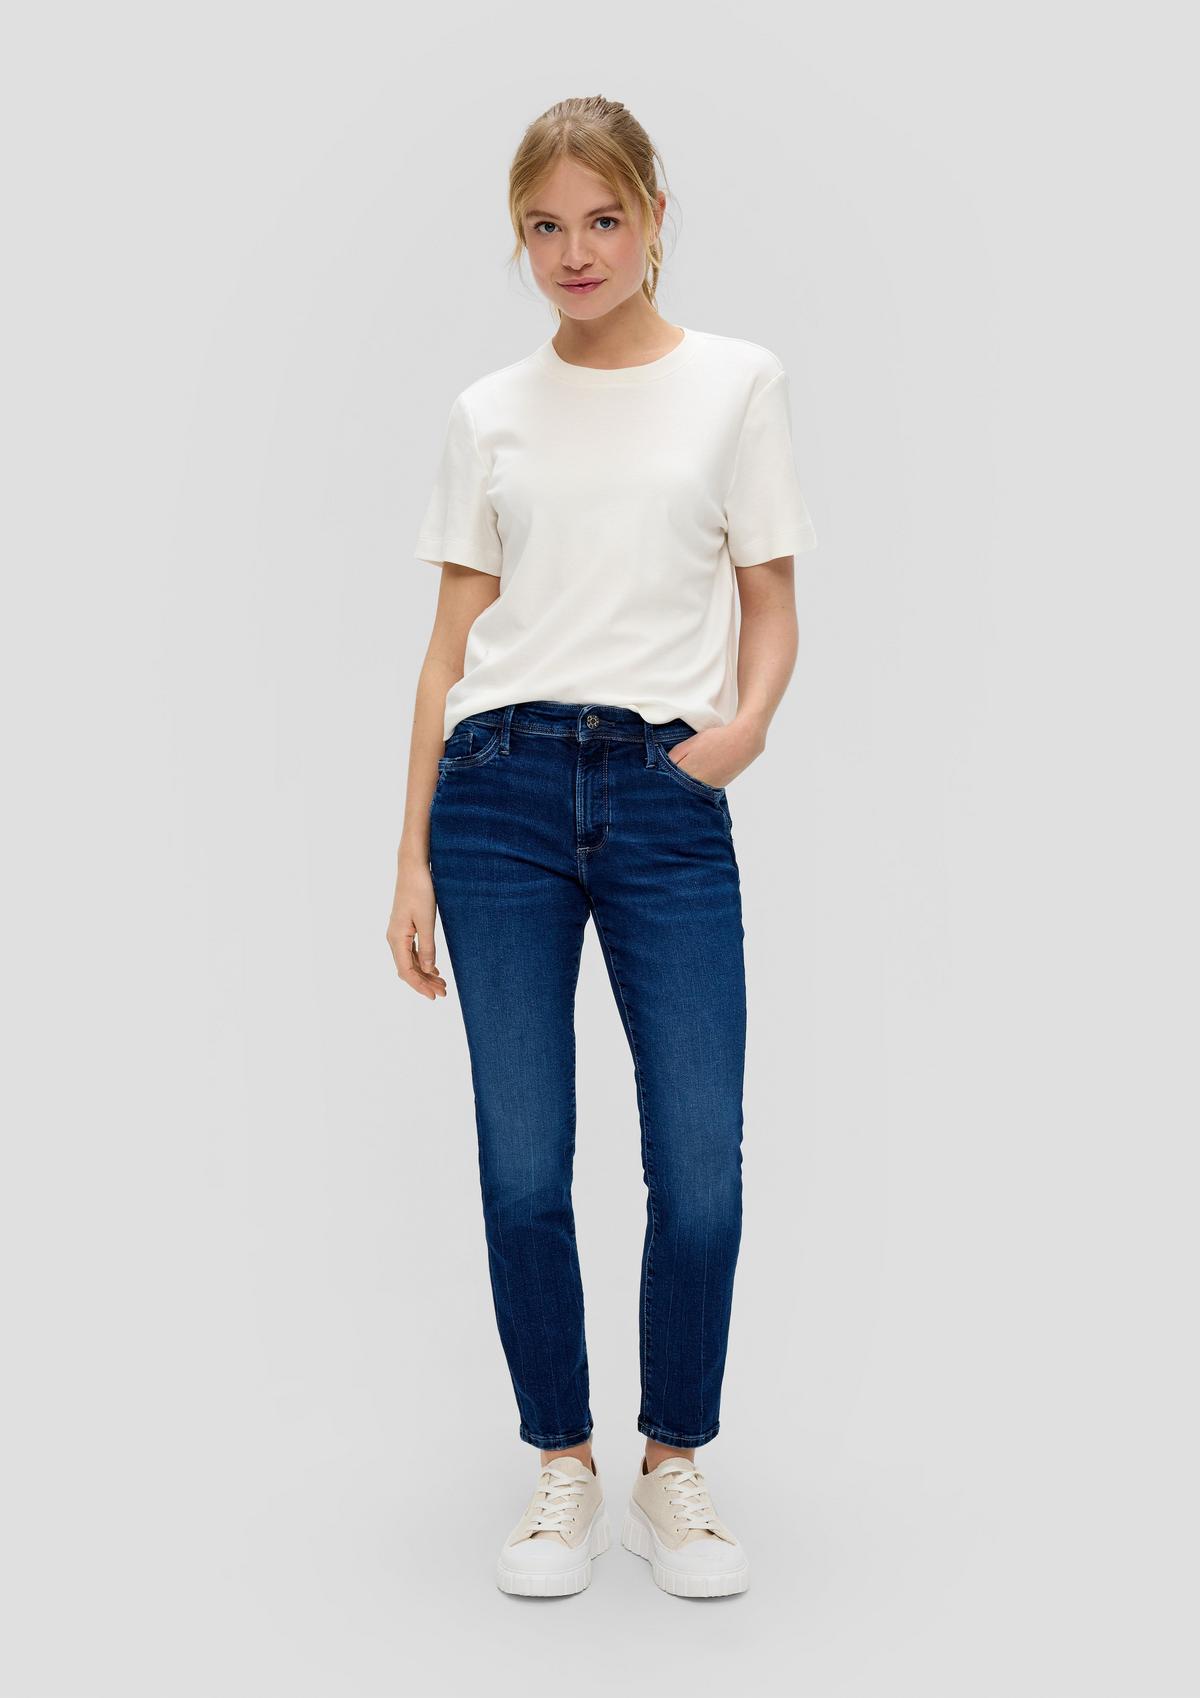 Jeans Betsy / Slim Fit / Mid Rise / Slim Leg